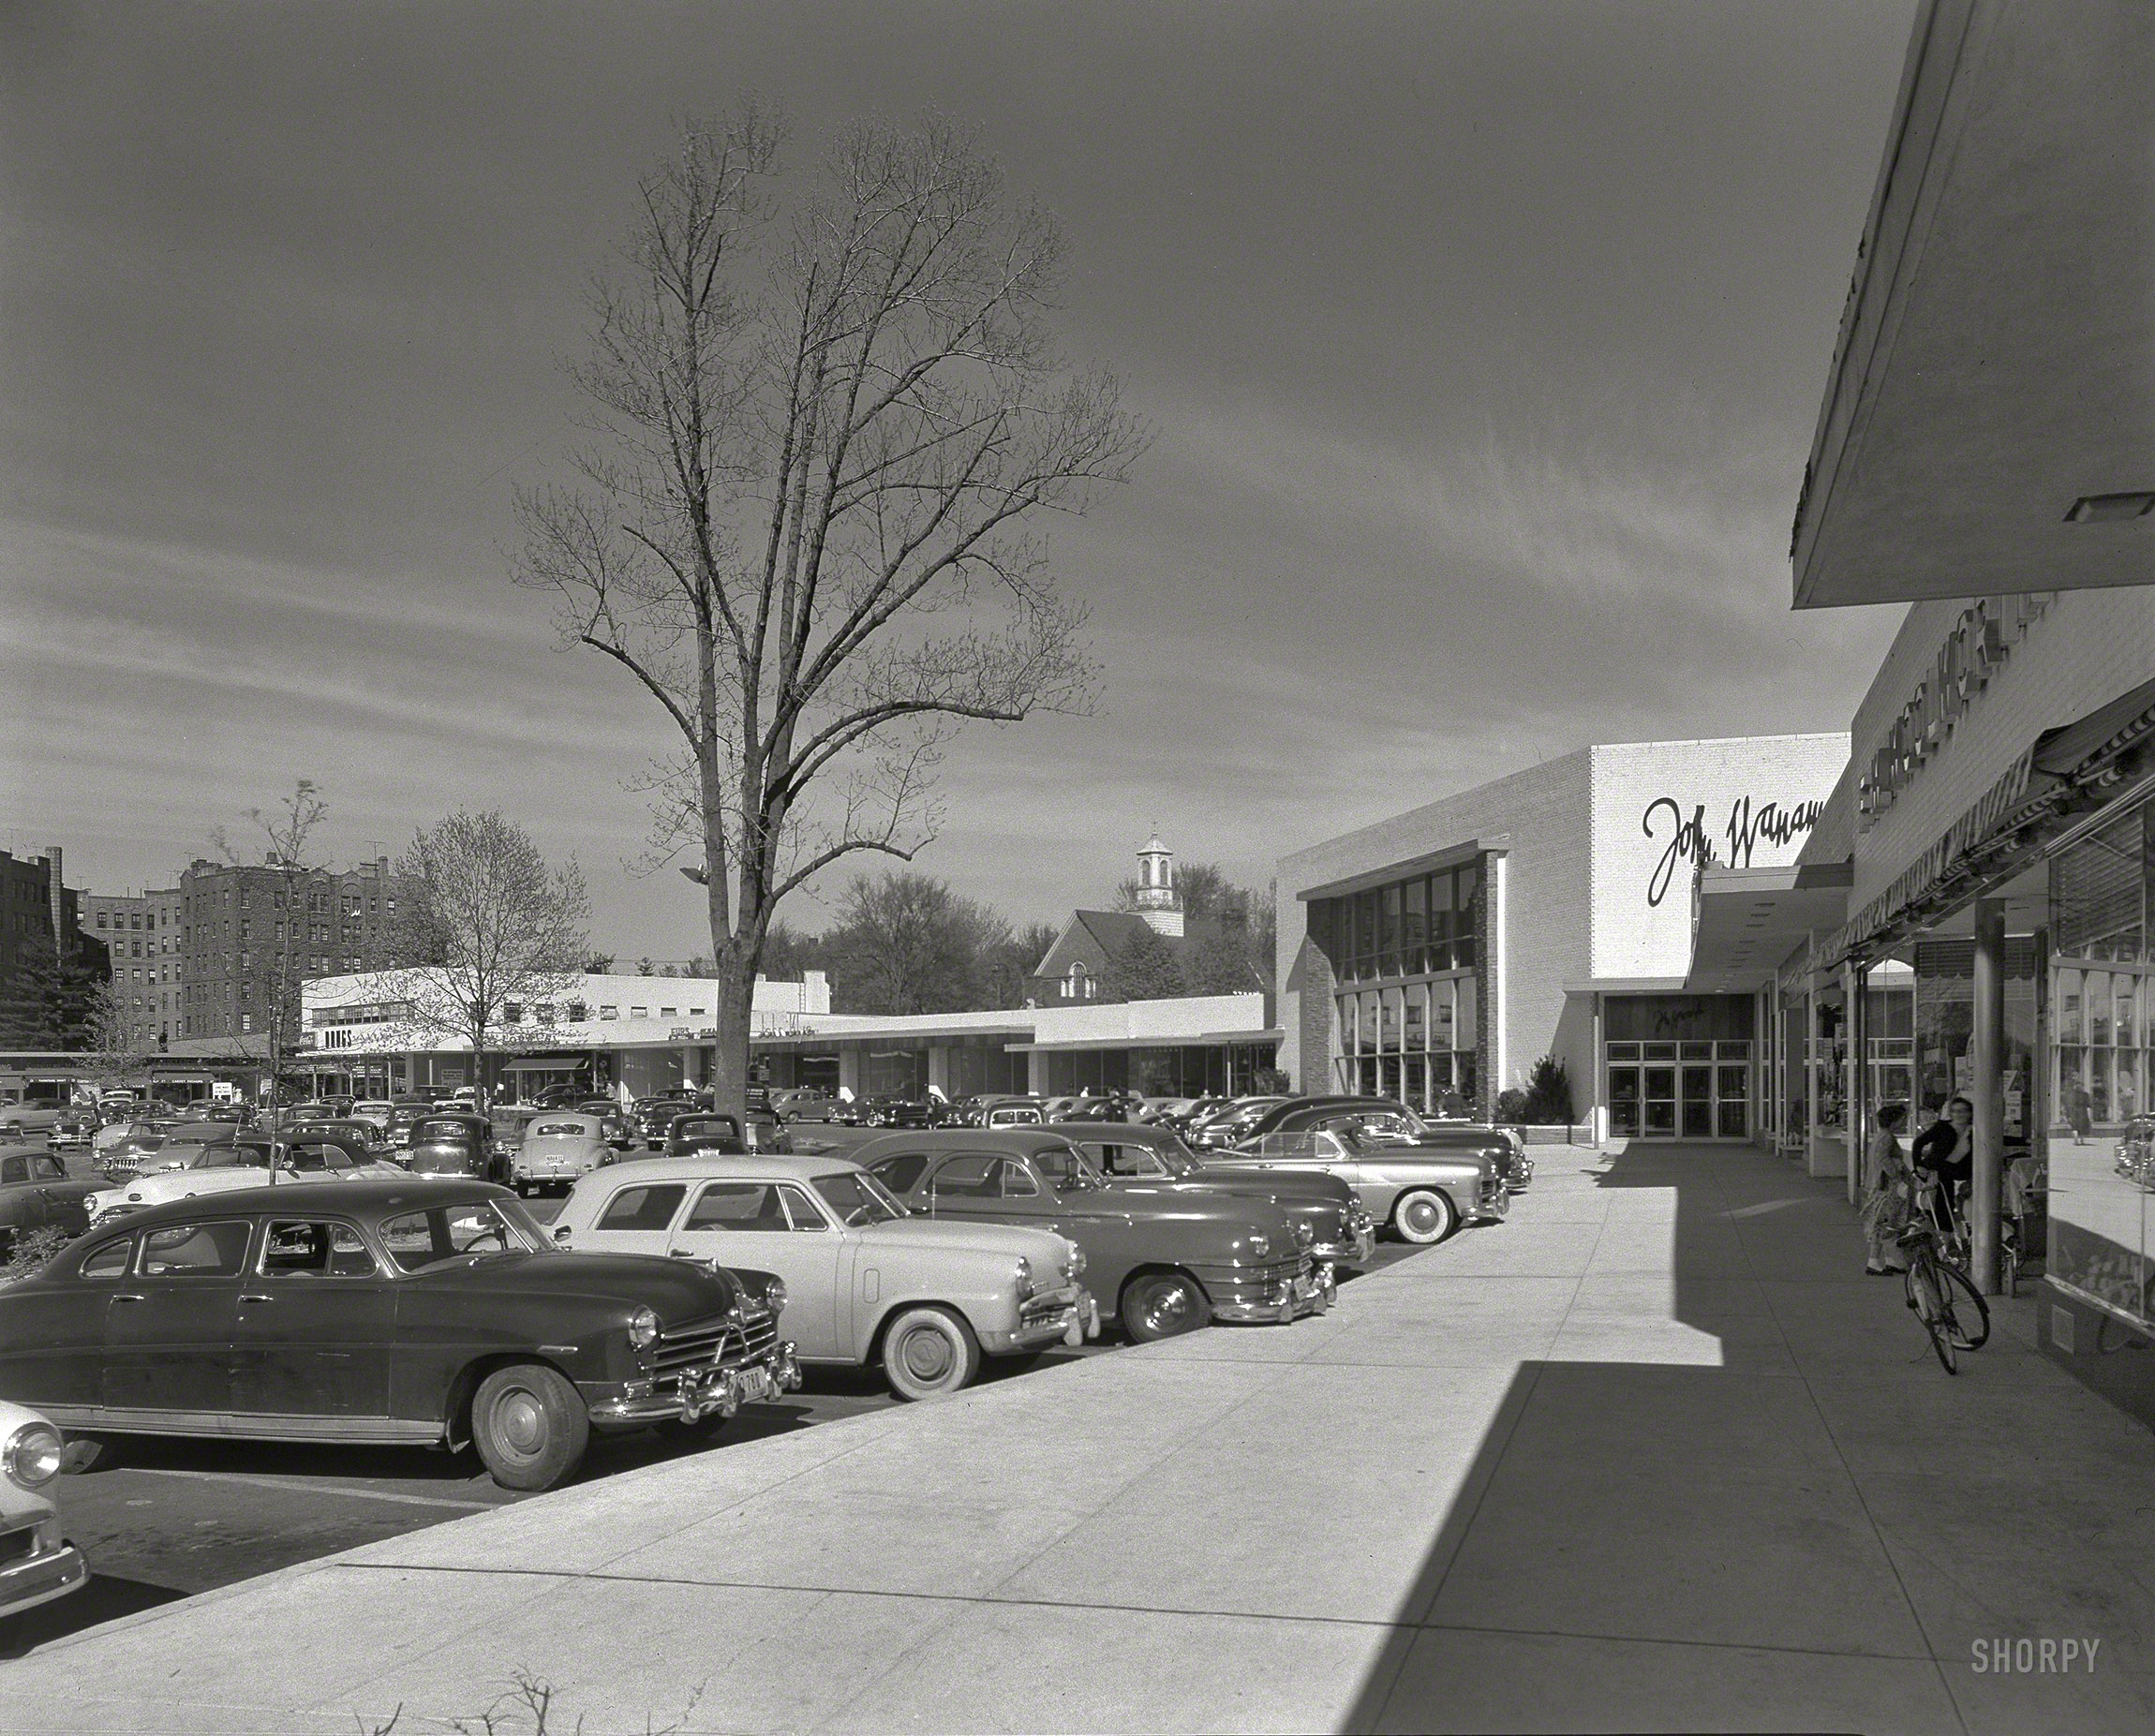 April 30, 1952. "Great Neck Shopping Center, Great Neck, Long Island. Lathrop Douglass, architect." Graveyard of forgotten brands: Hudson, Studebaker, Wanamaker. Seen here earlier. Gottscho-Schleisner photo. View full size.